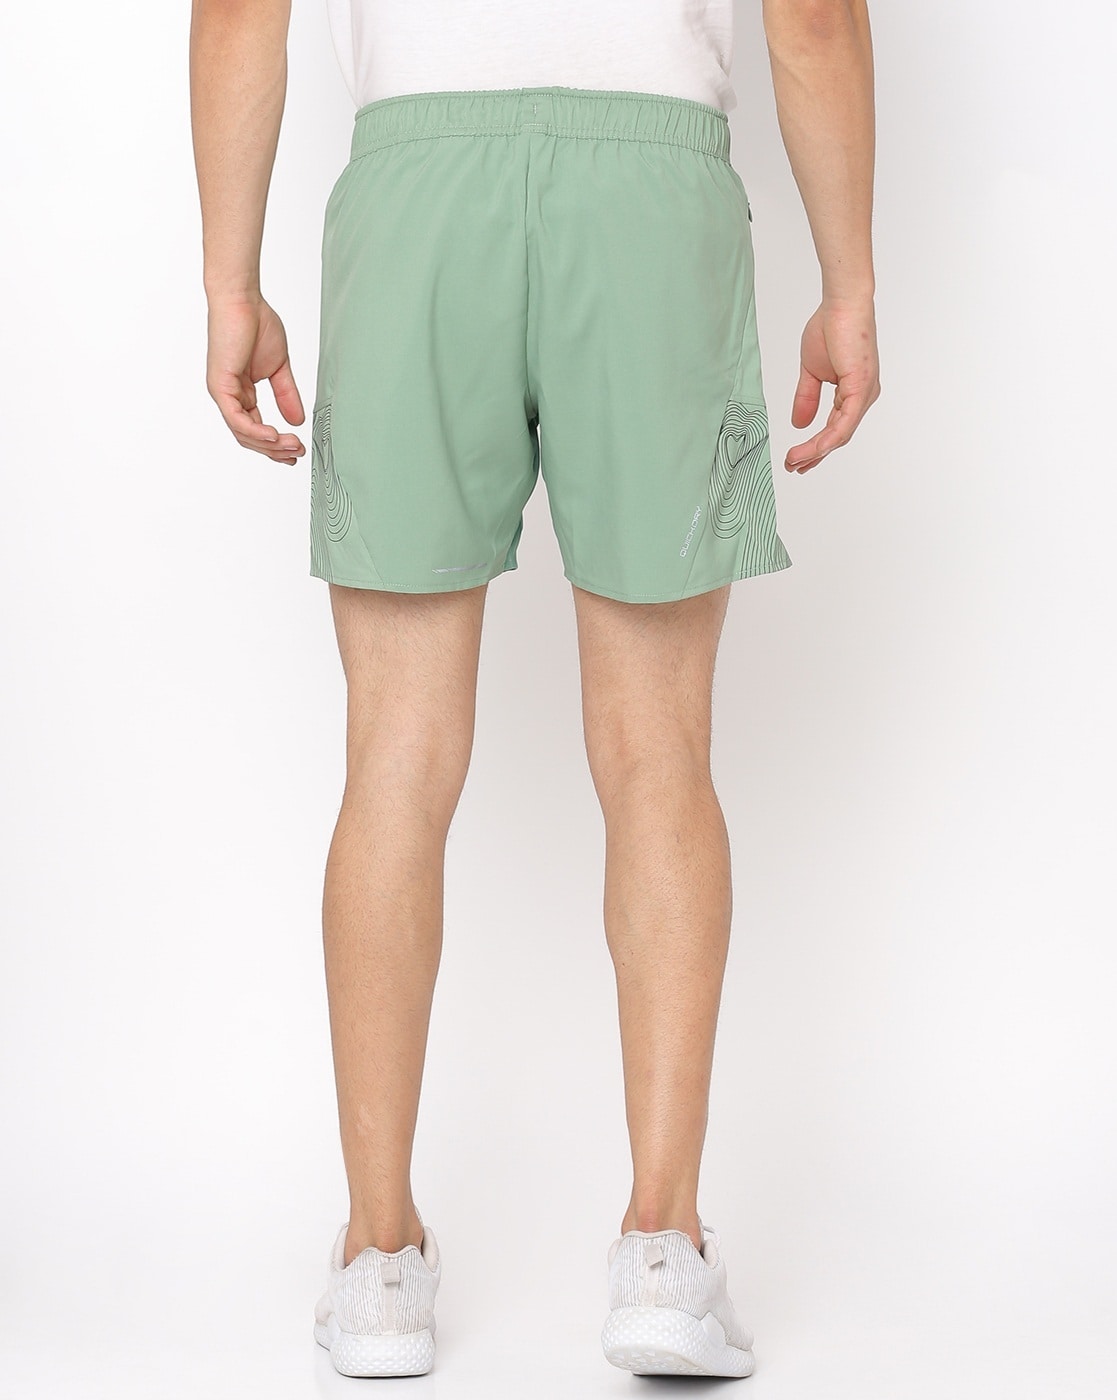 Shorts with Elasticated Waistband